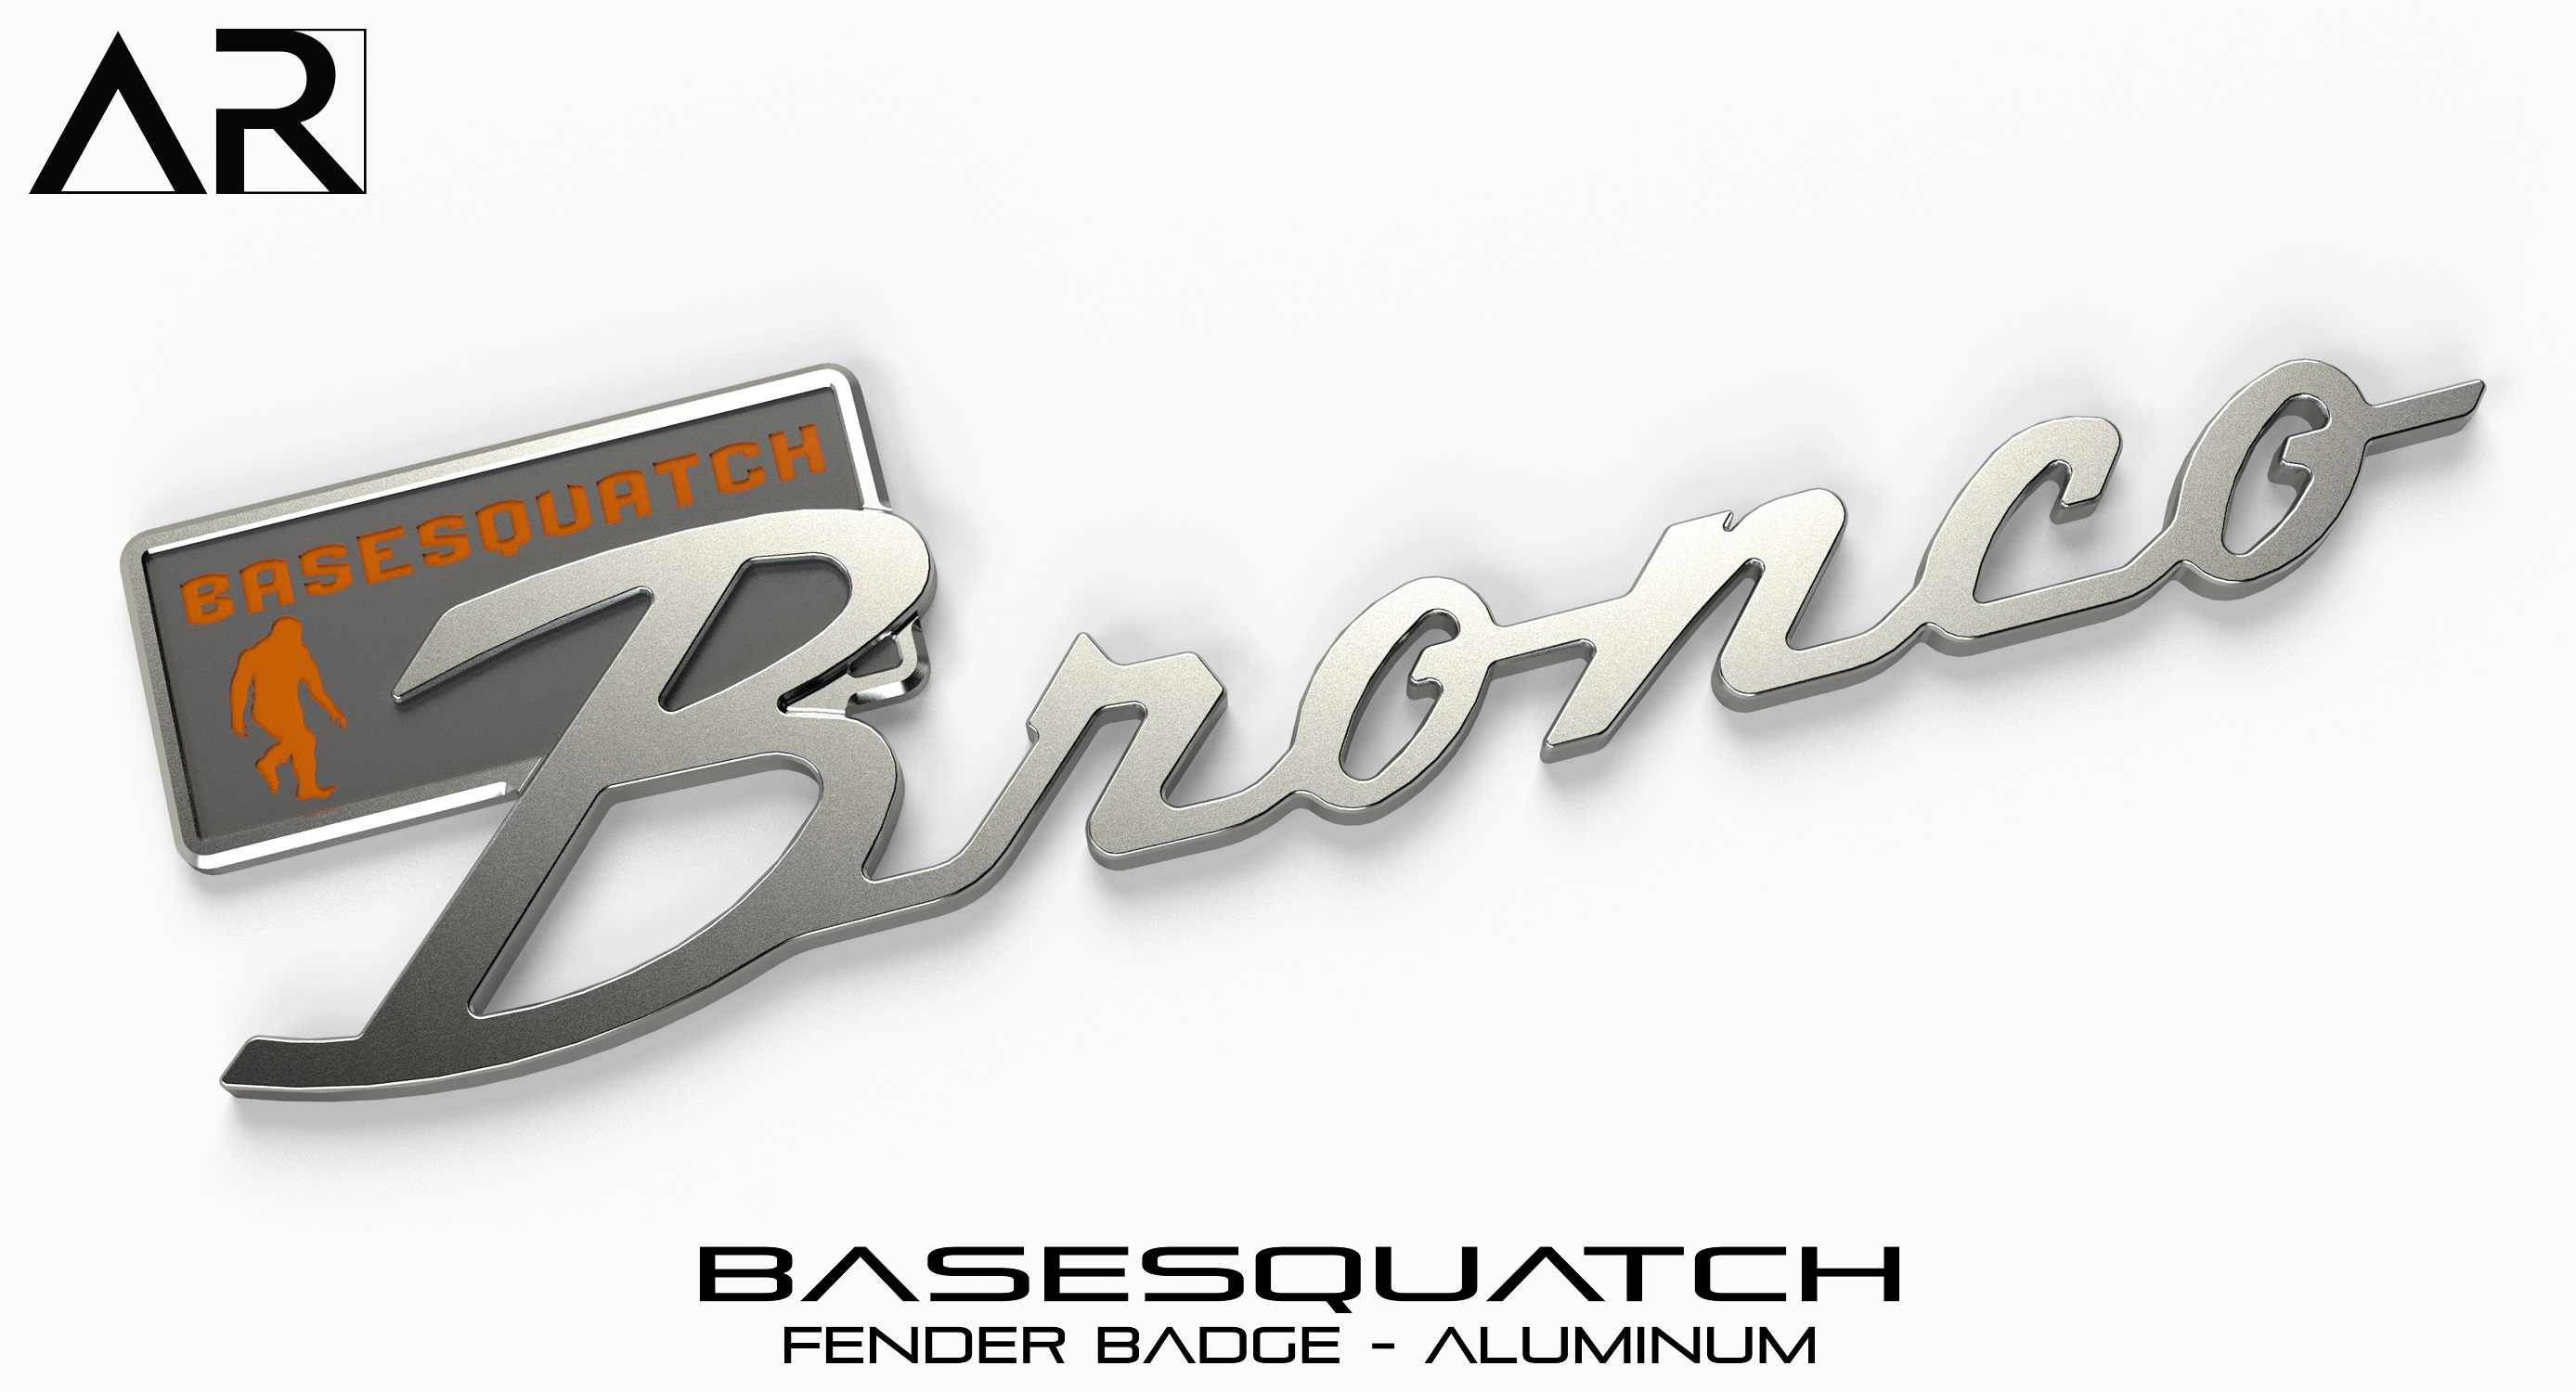 Ford Bronco AR | BRONCO CLASSIC DNA Fender Badge 1601009 - Fender Badge - Basesquatch - Aluminum